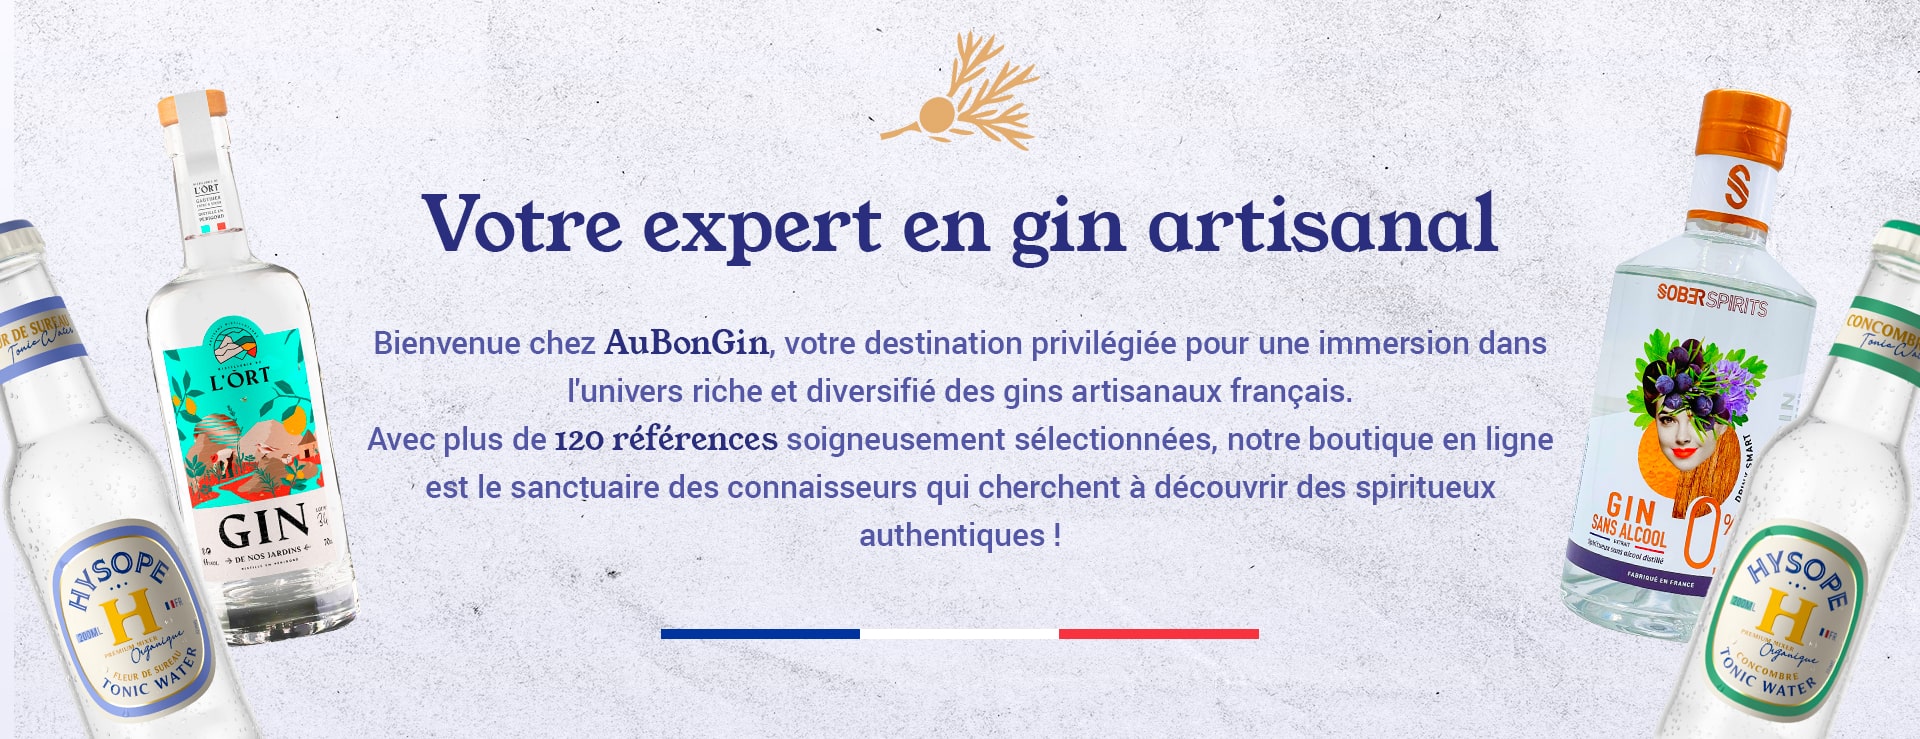 AuBonGin est l'expert en gin artisanal